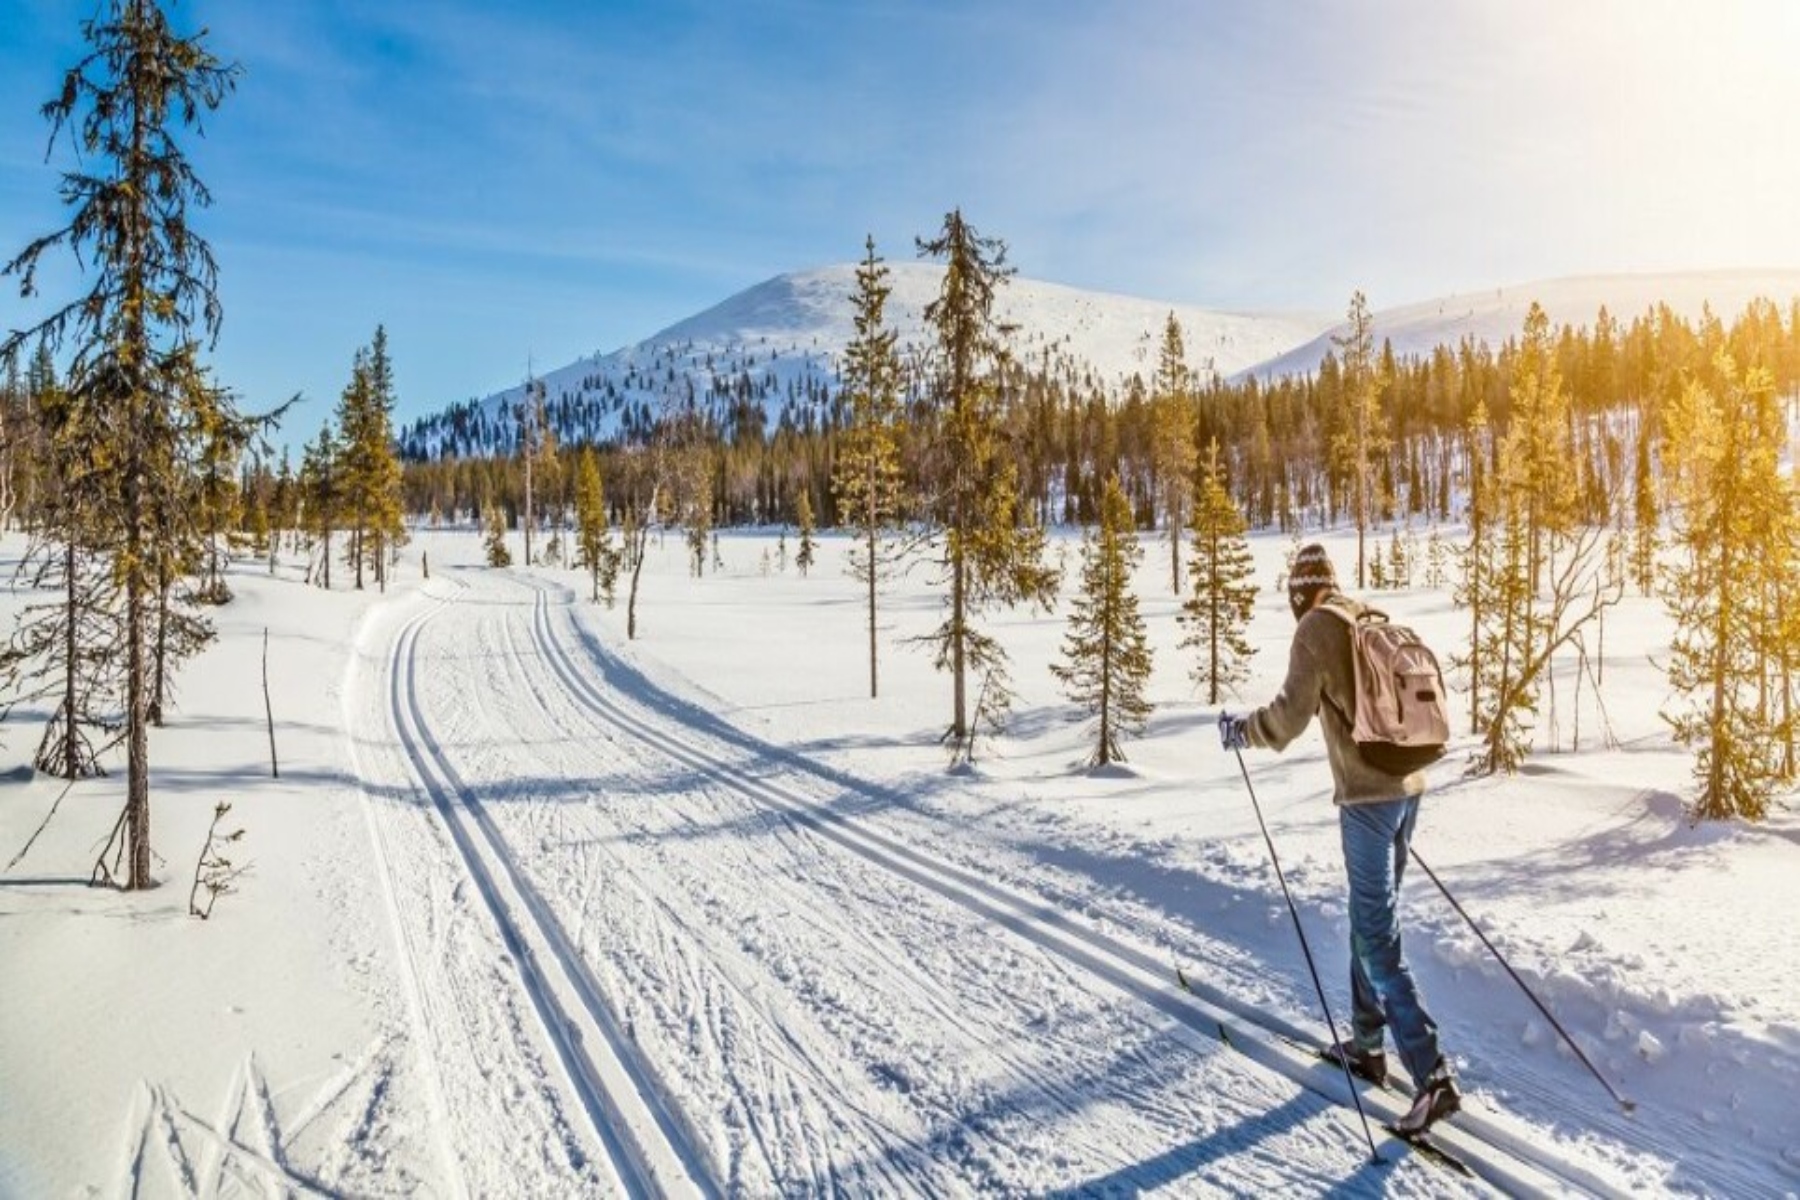 PFAS σκι: Οι σκιέρ αφήνουν παντοτινά χημικά στις πίστες σκι